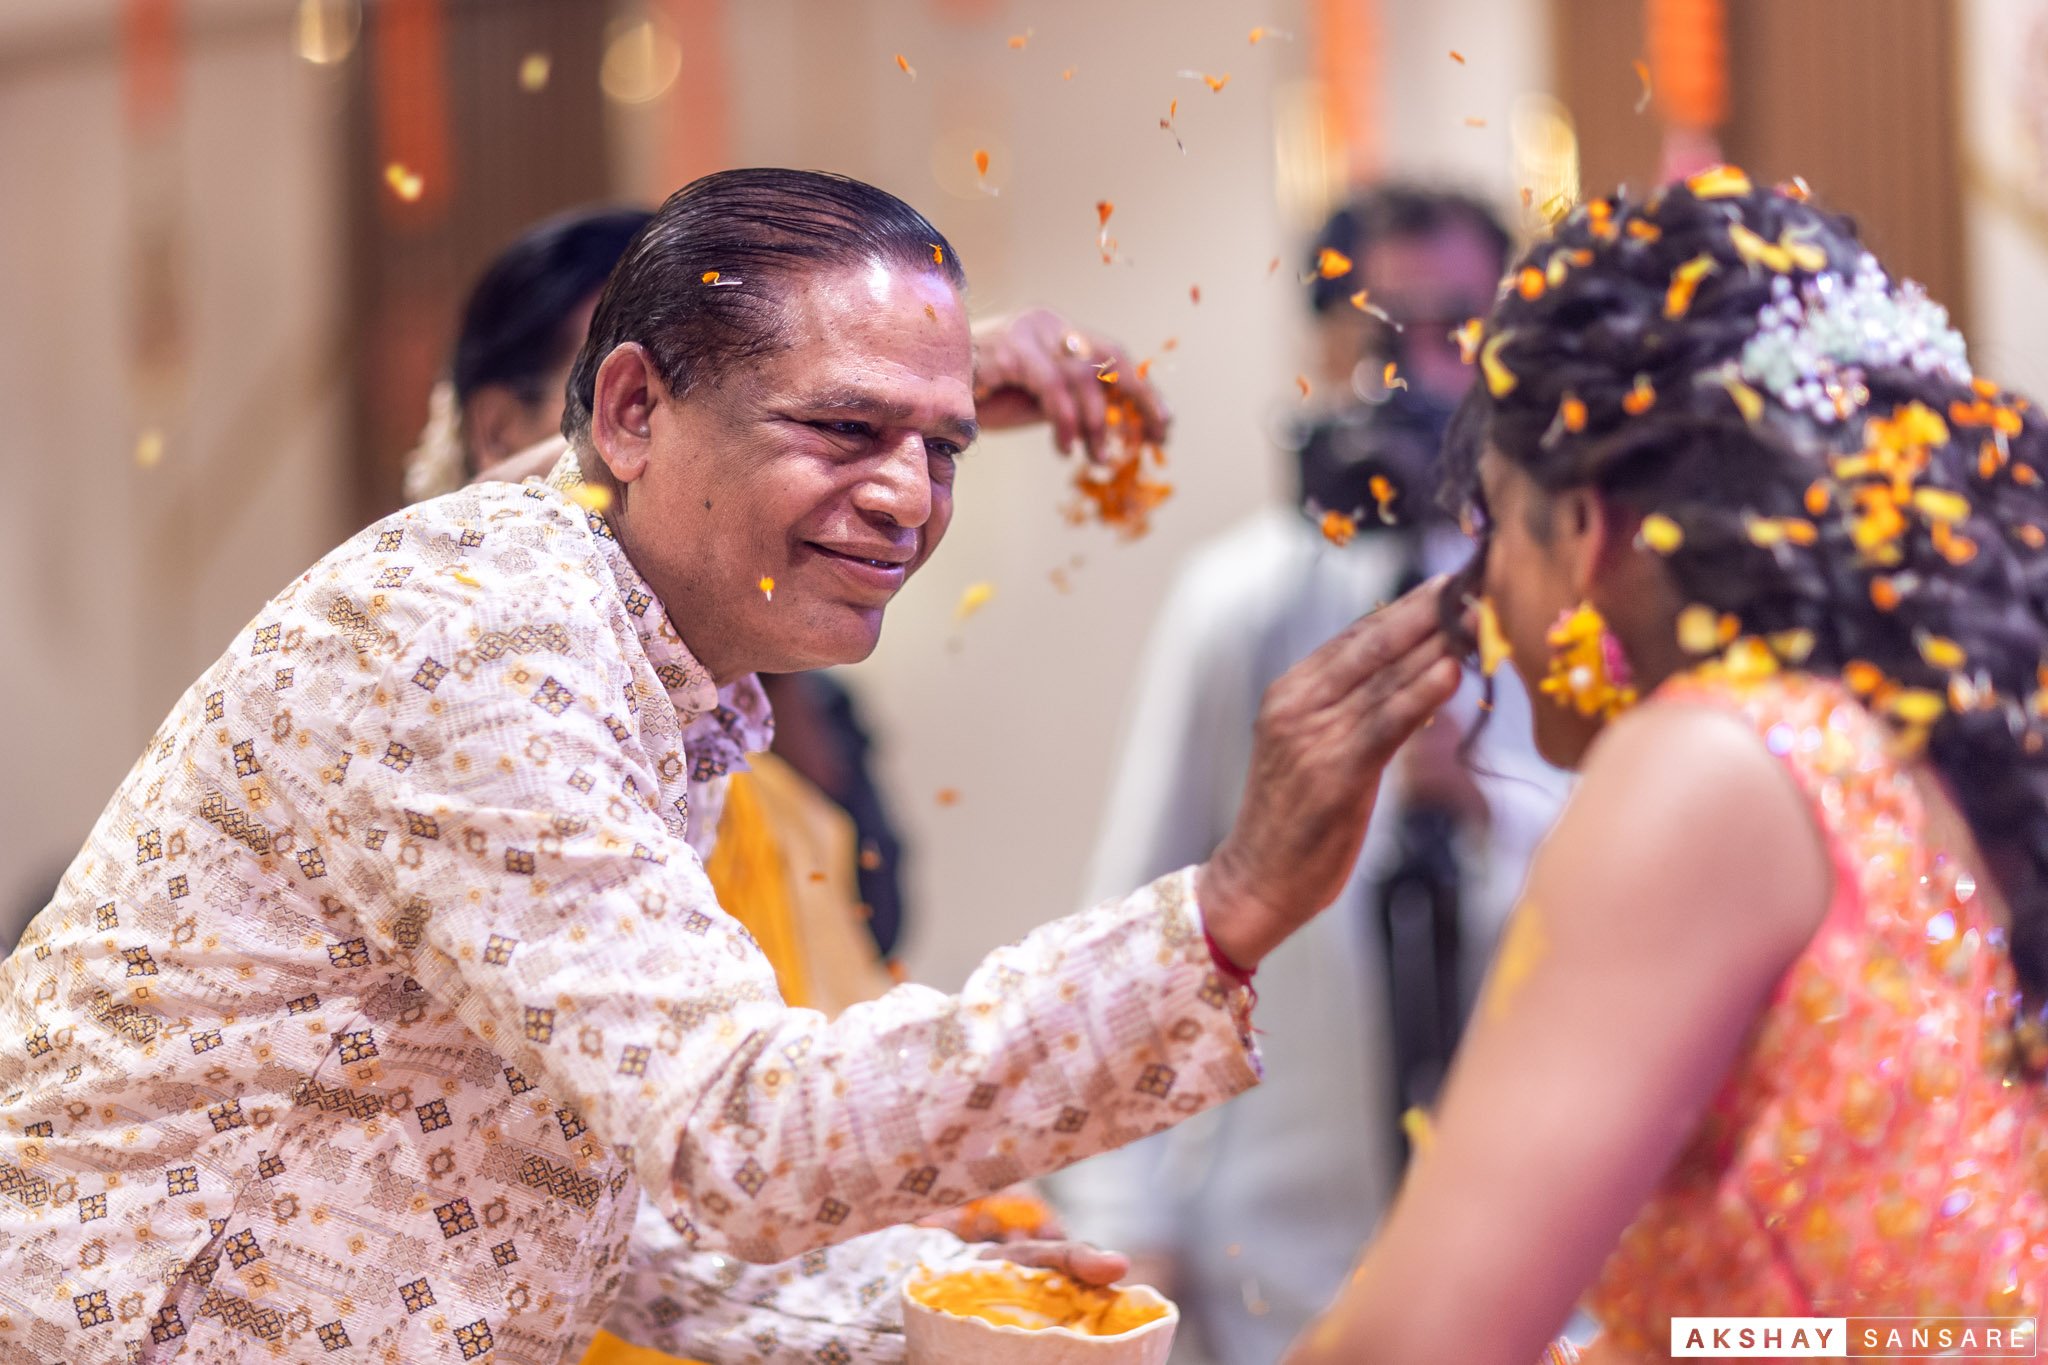 Lipika x Bhavya Compress Akshay Sansare Photography & Films Best wedding photographers in mumbai india-24.jpg